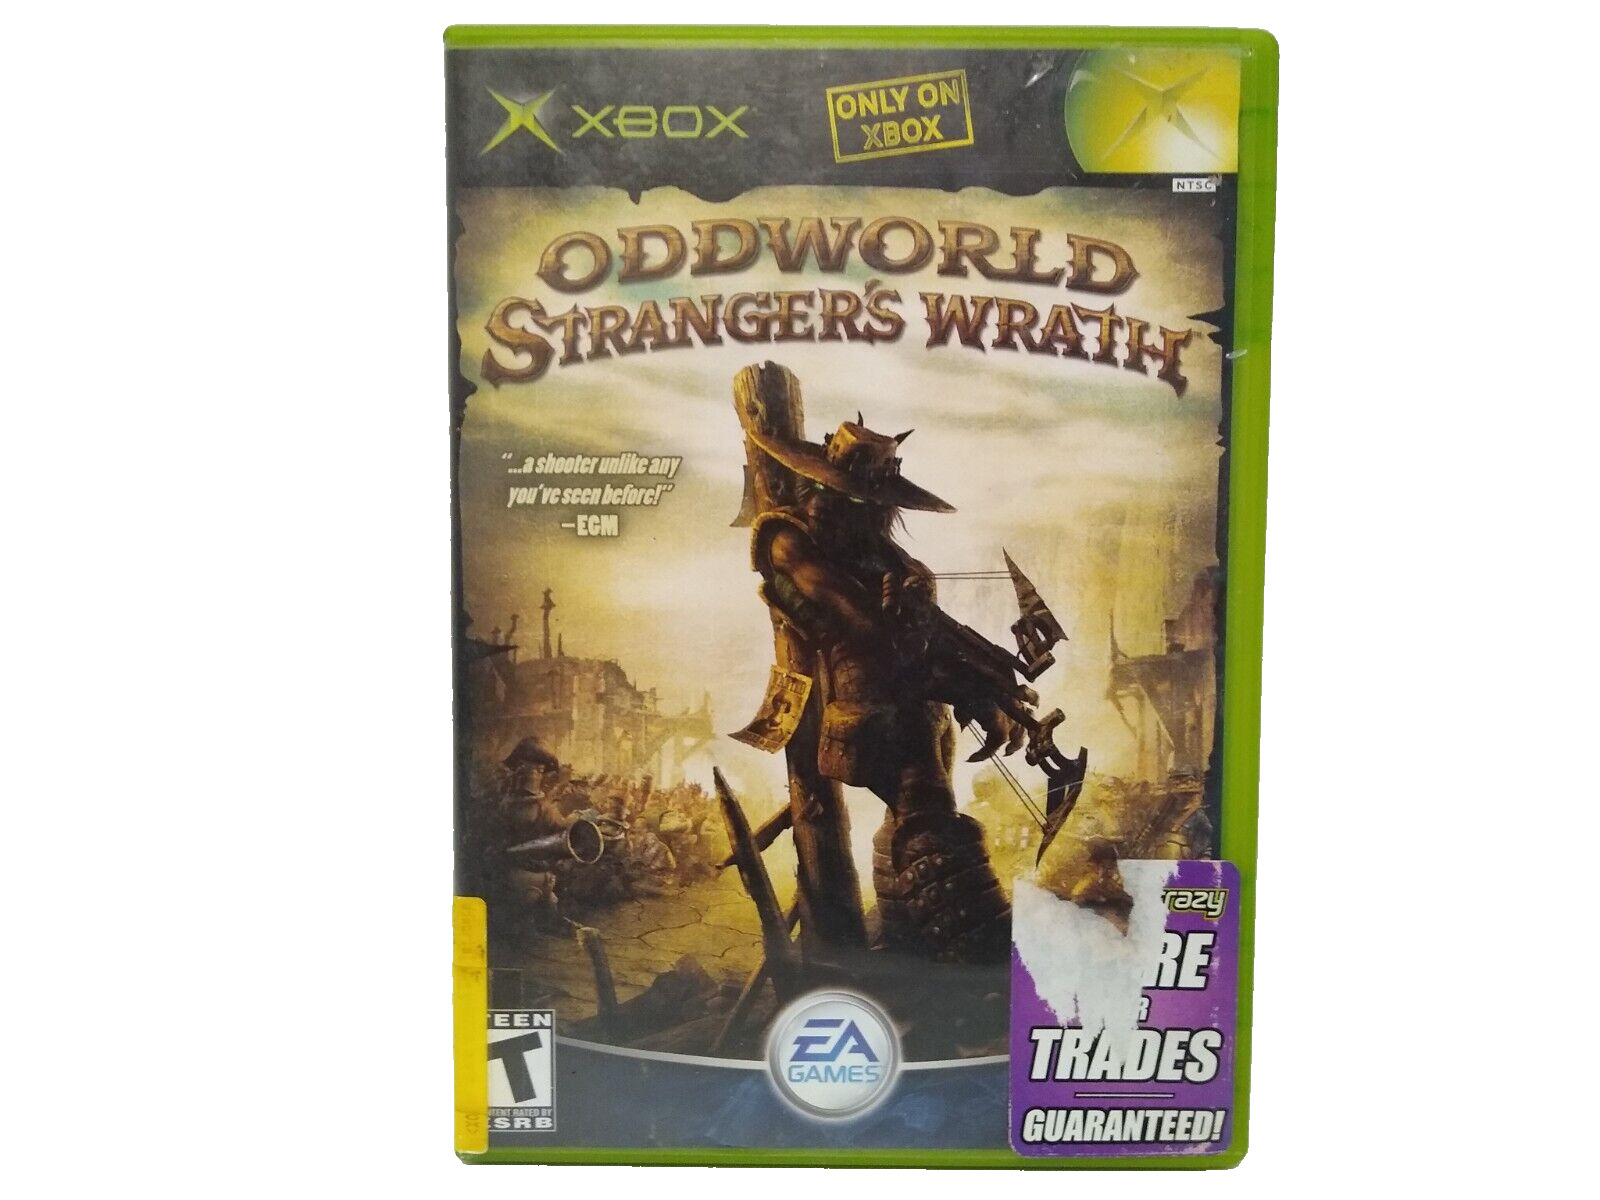 ODDWORLD: STRANGER'S WRATH Xbox game Complete CIB Tested & Works